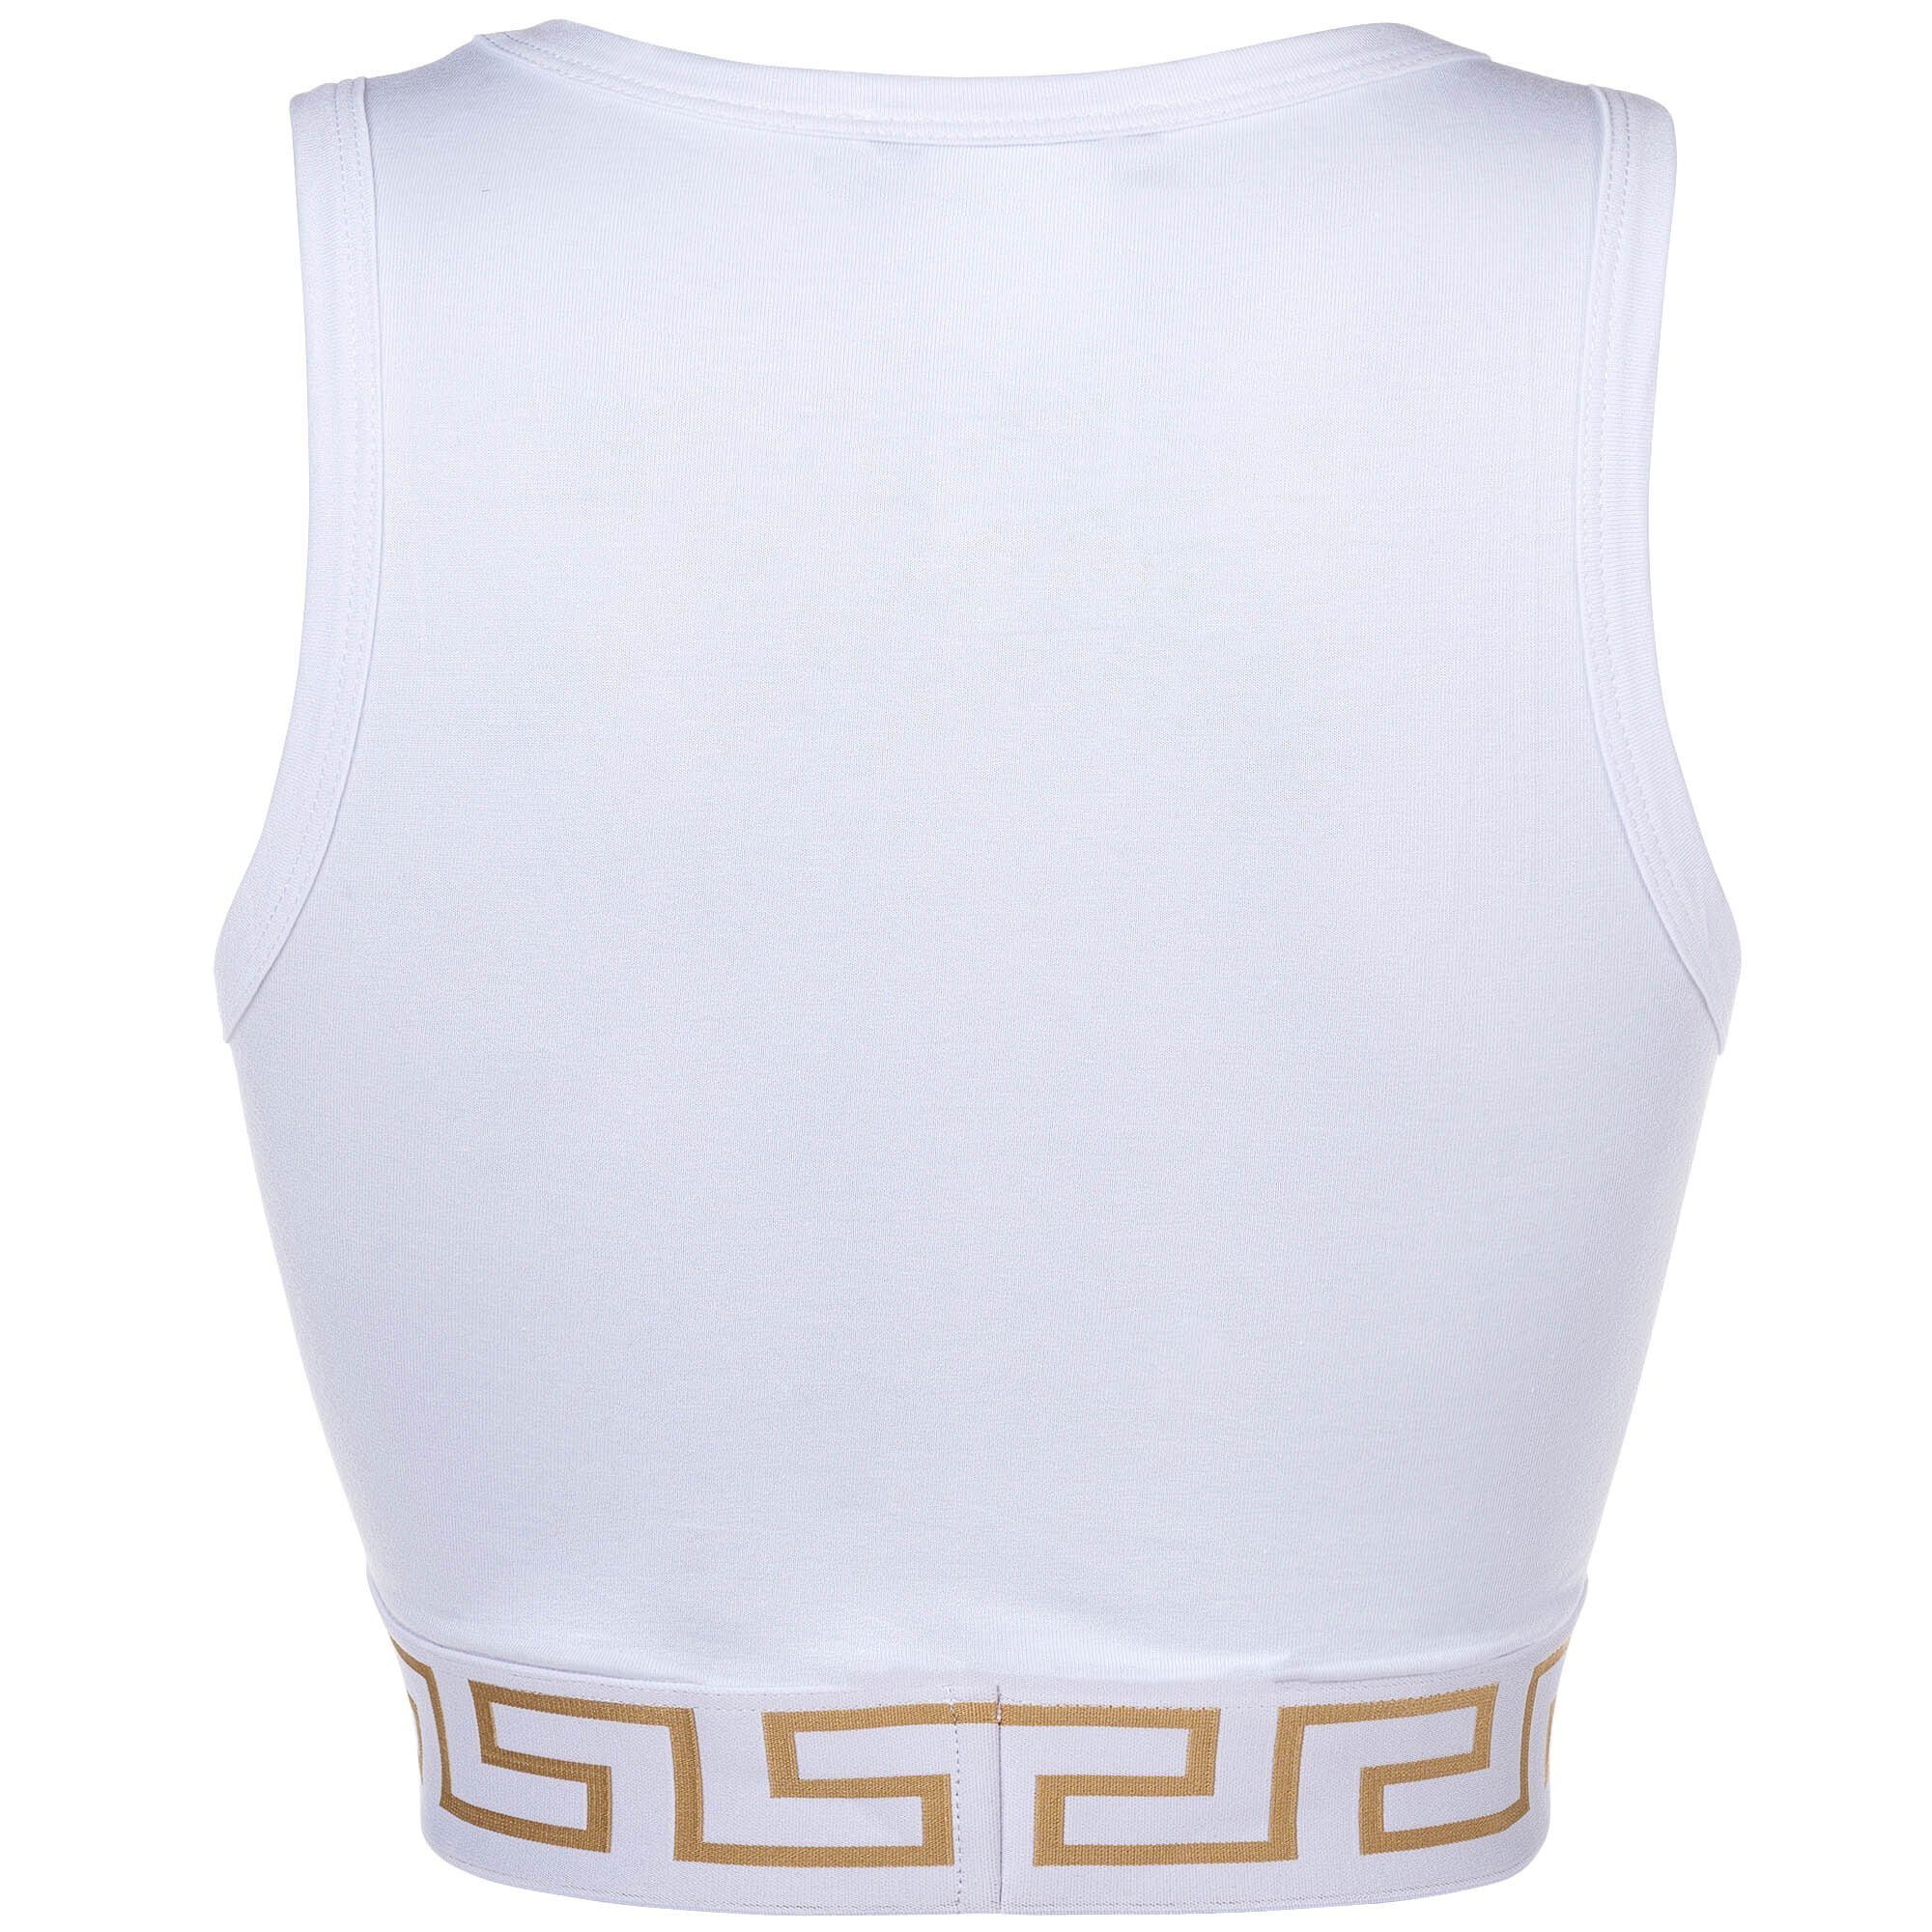 Versace Bustier Damen Weiß Tank T-Shirt, - Bustier TOPEKA, Underwear